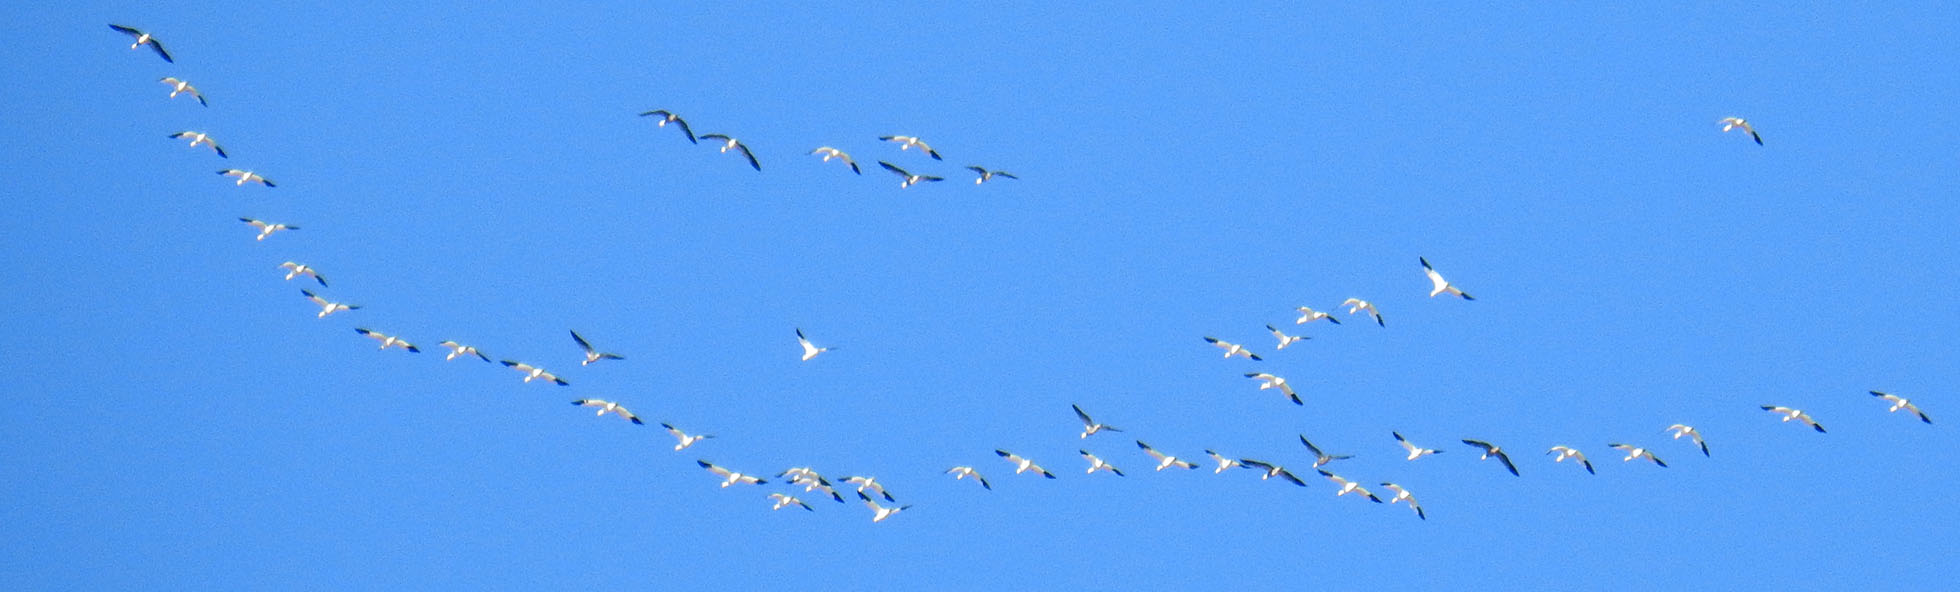 flock of birds in blue sky